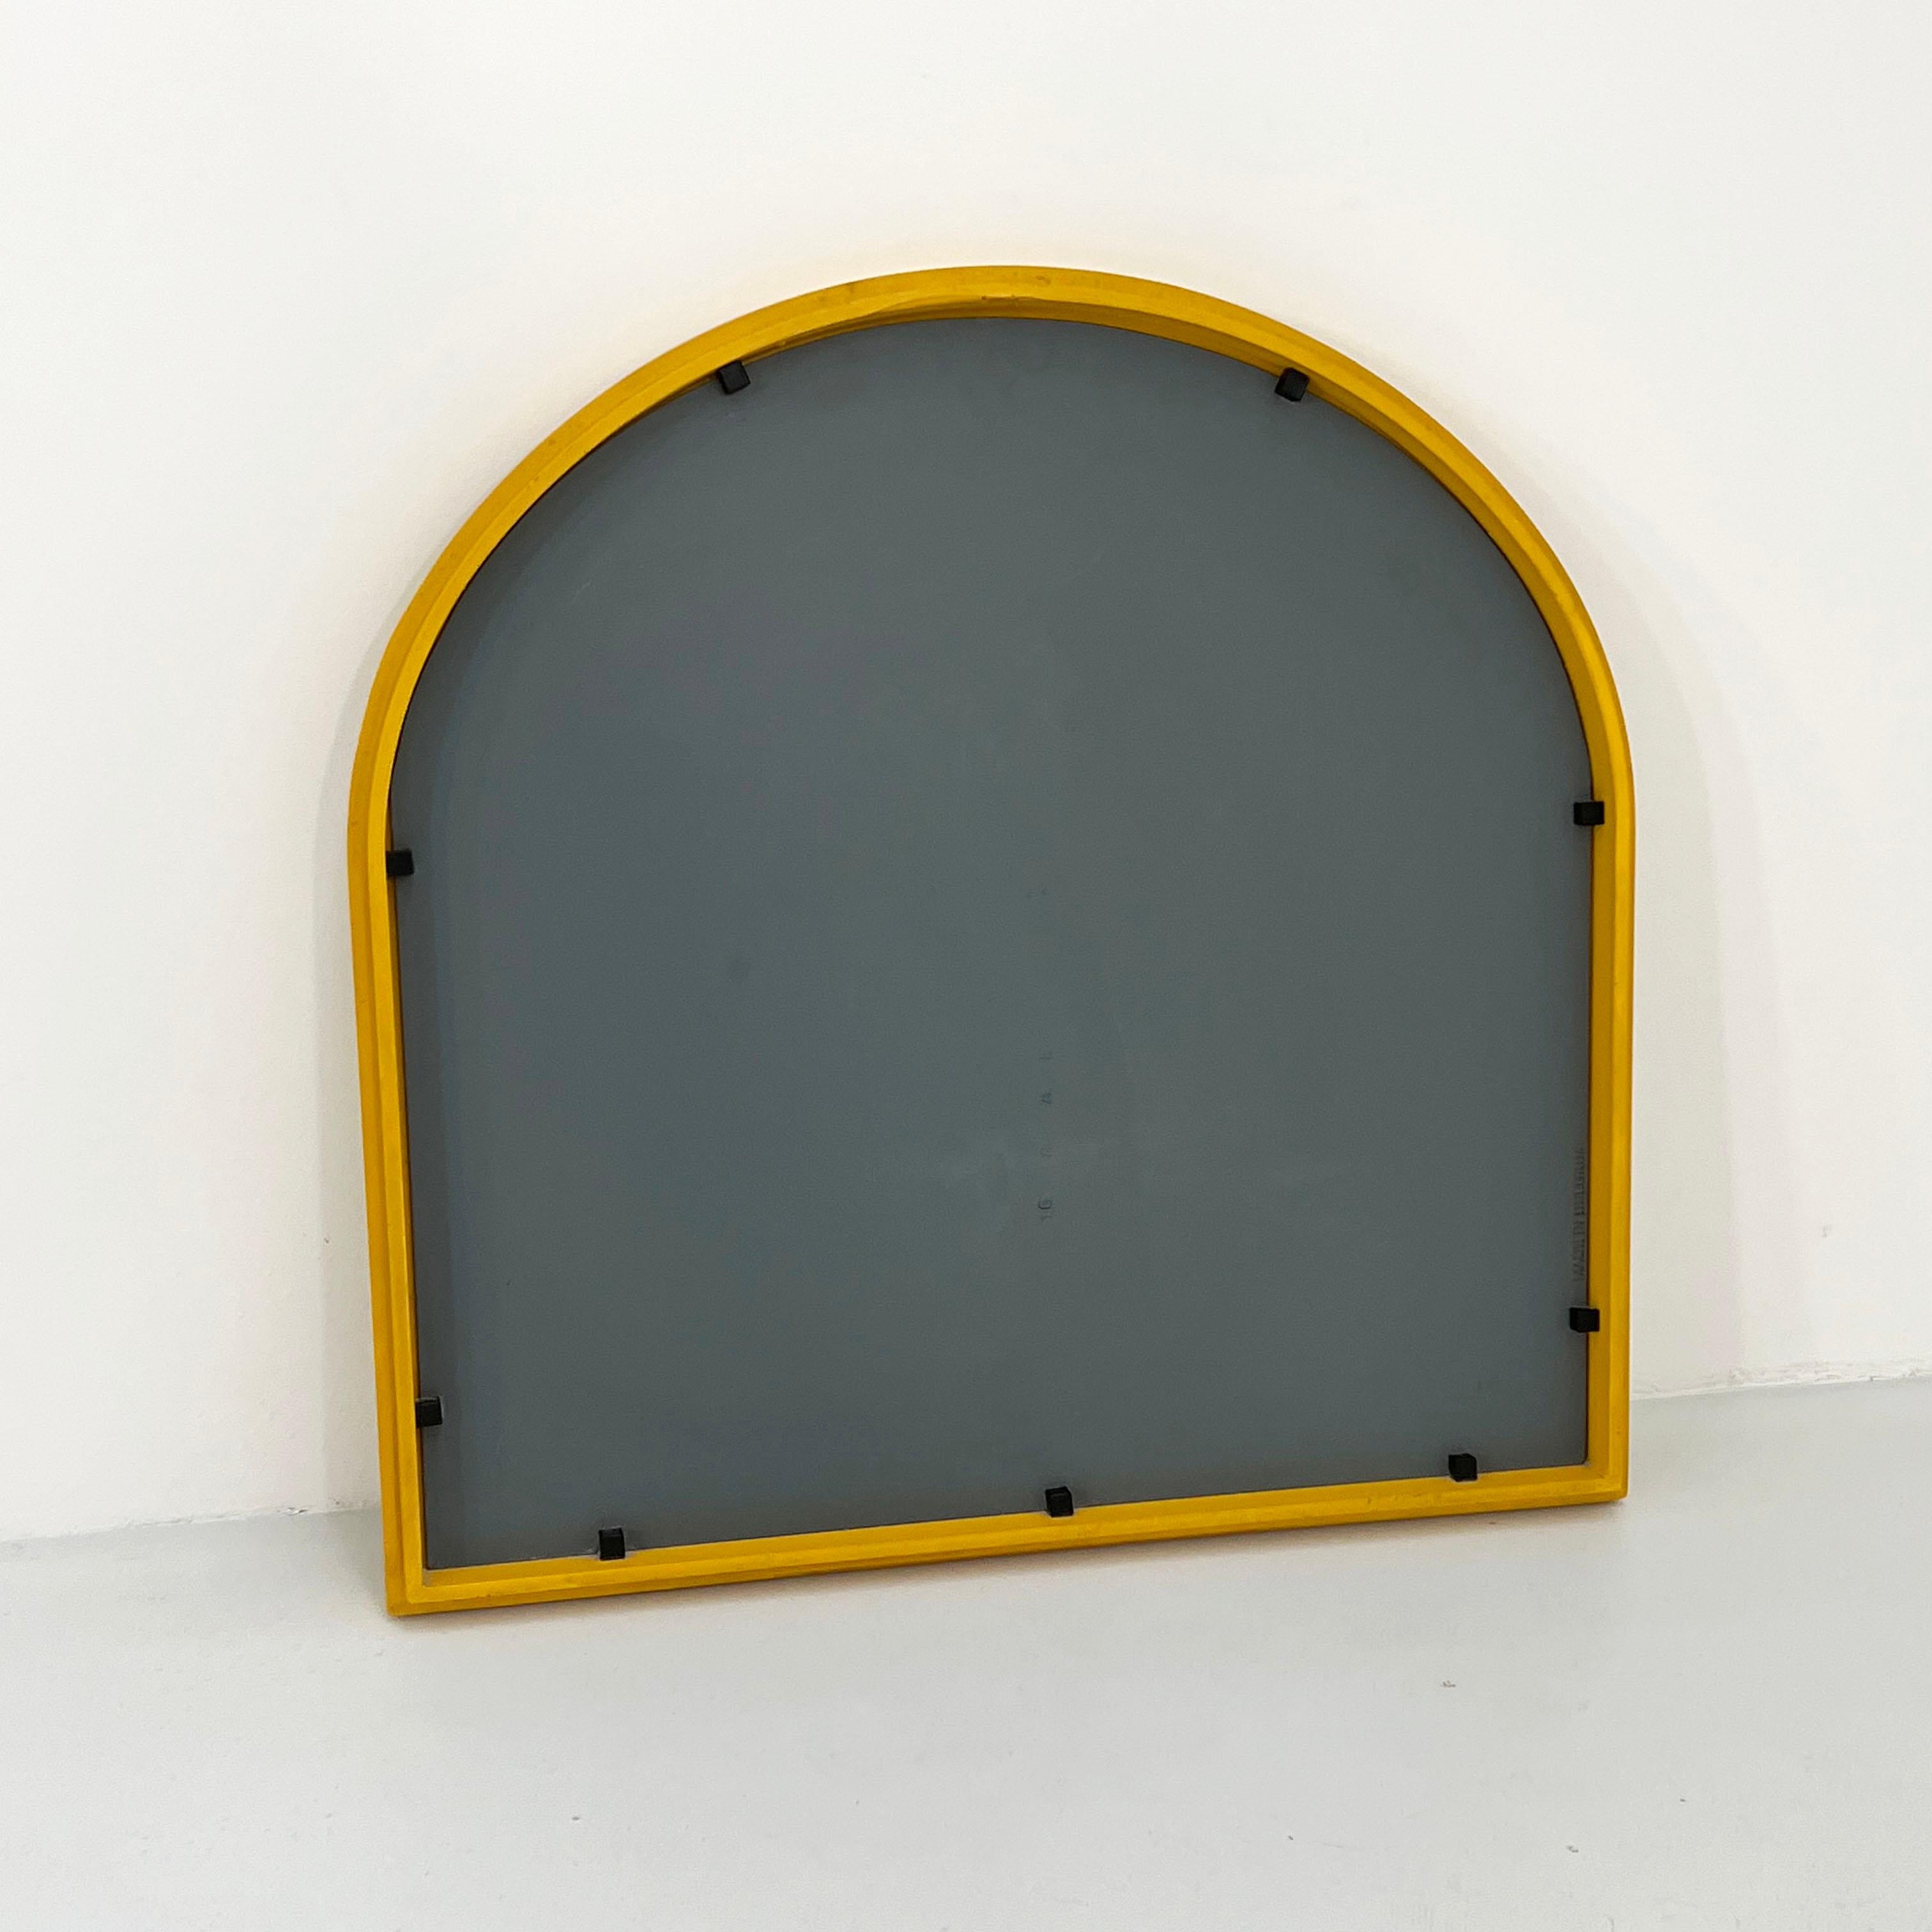 Glass Yellow Frame Mirror Model 4720 by Anna Castelli Ferrieri for Kartell, 1980s